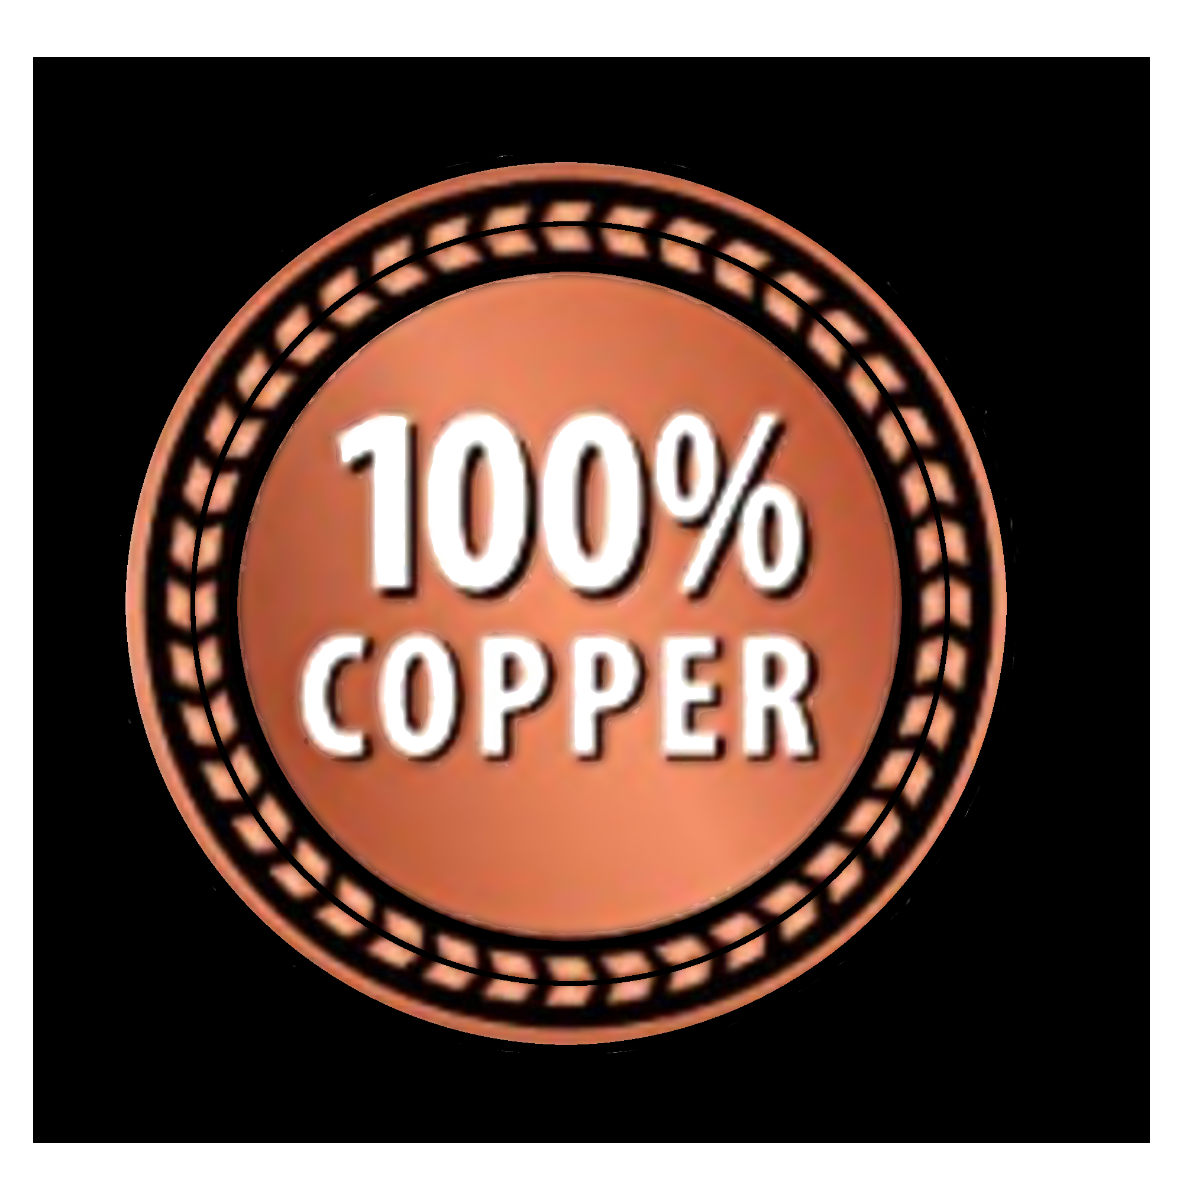 A7 100% Pure copper magnetic band ‘Geo Fern’